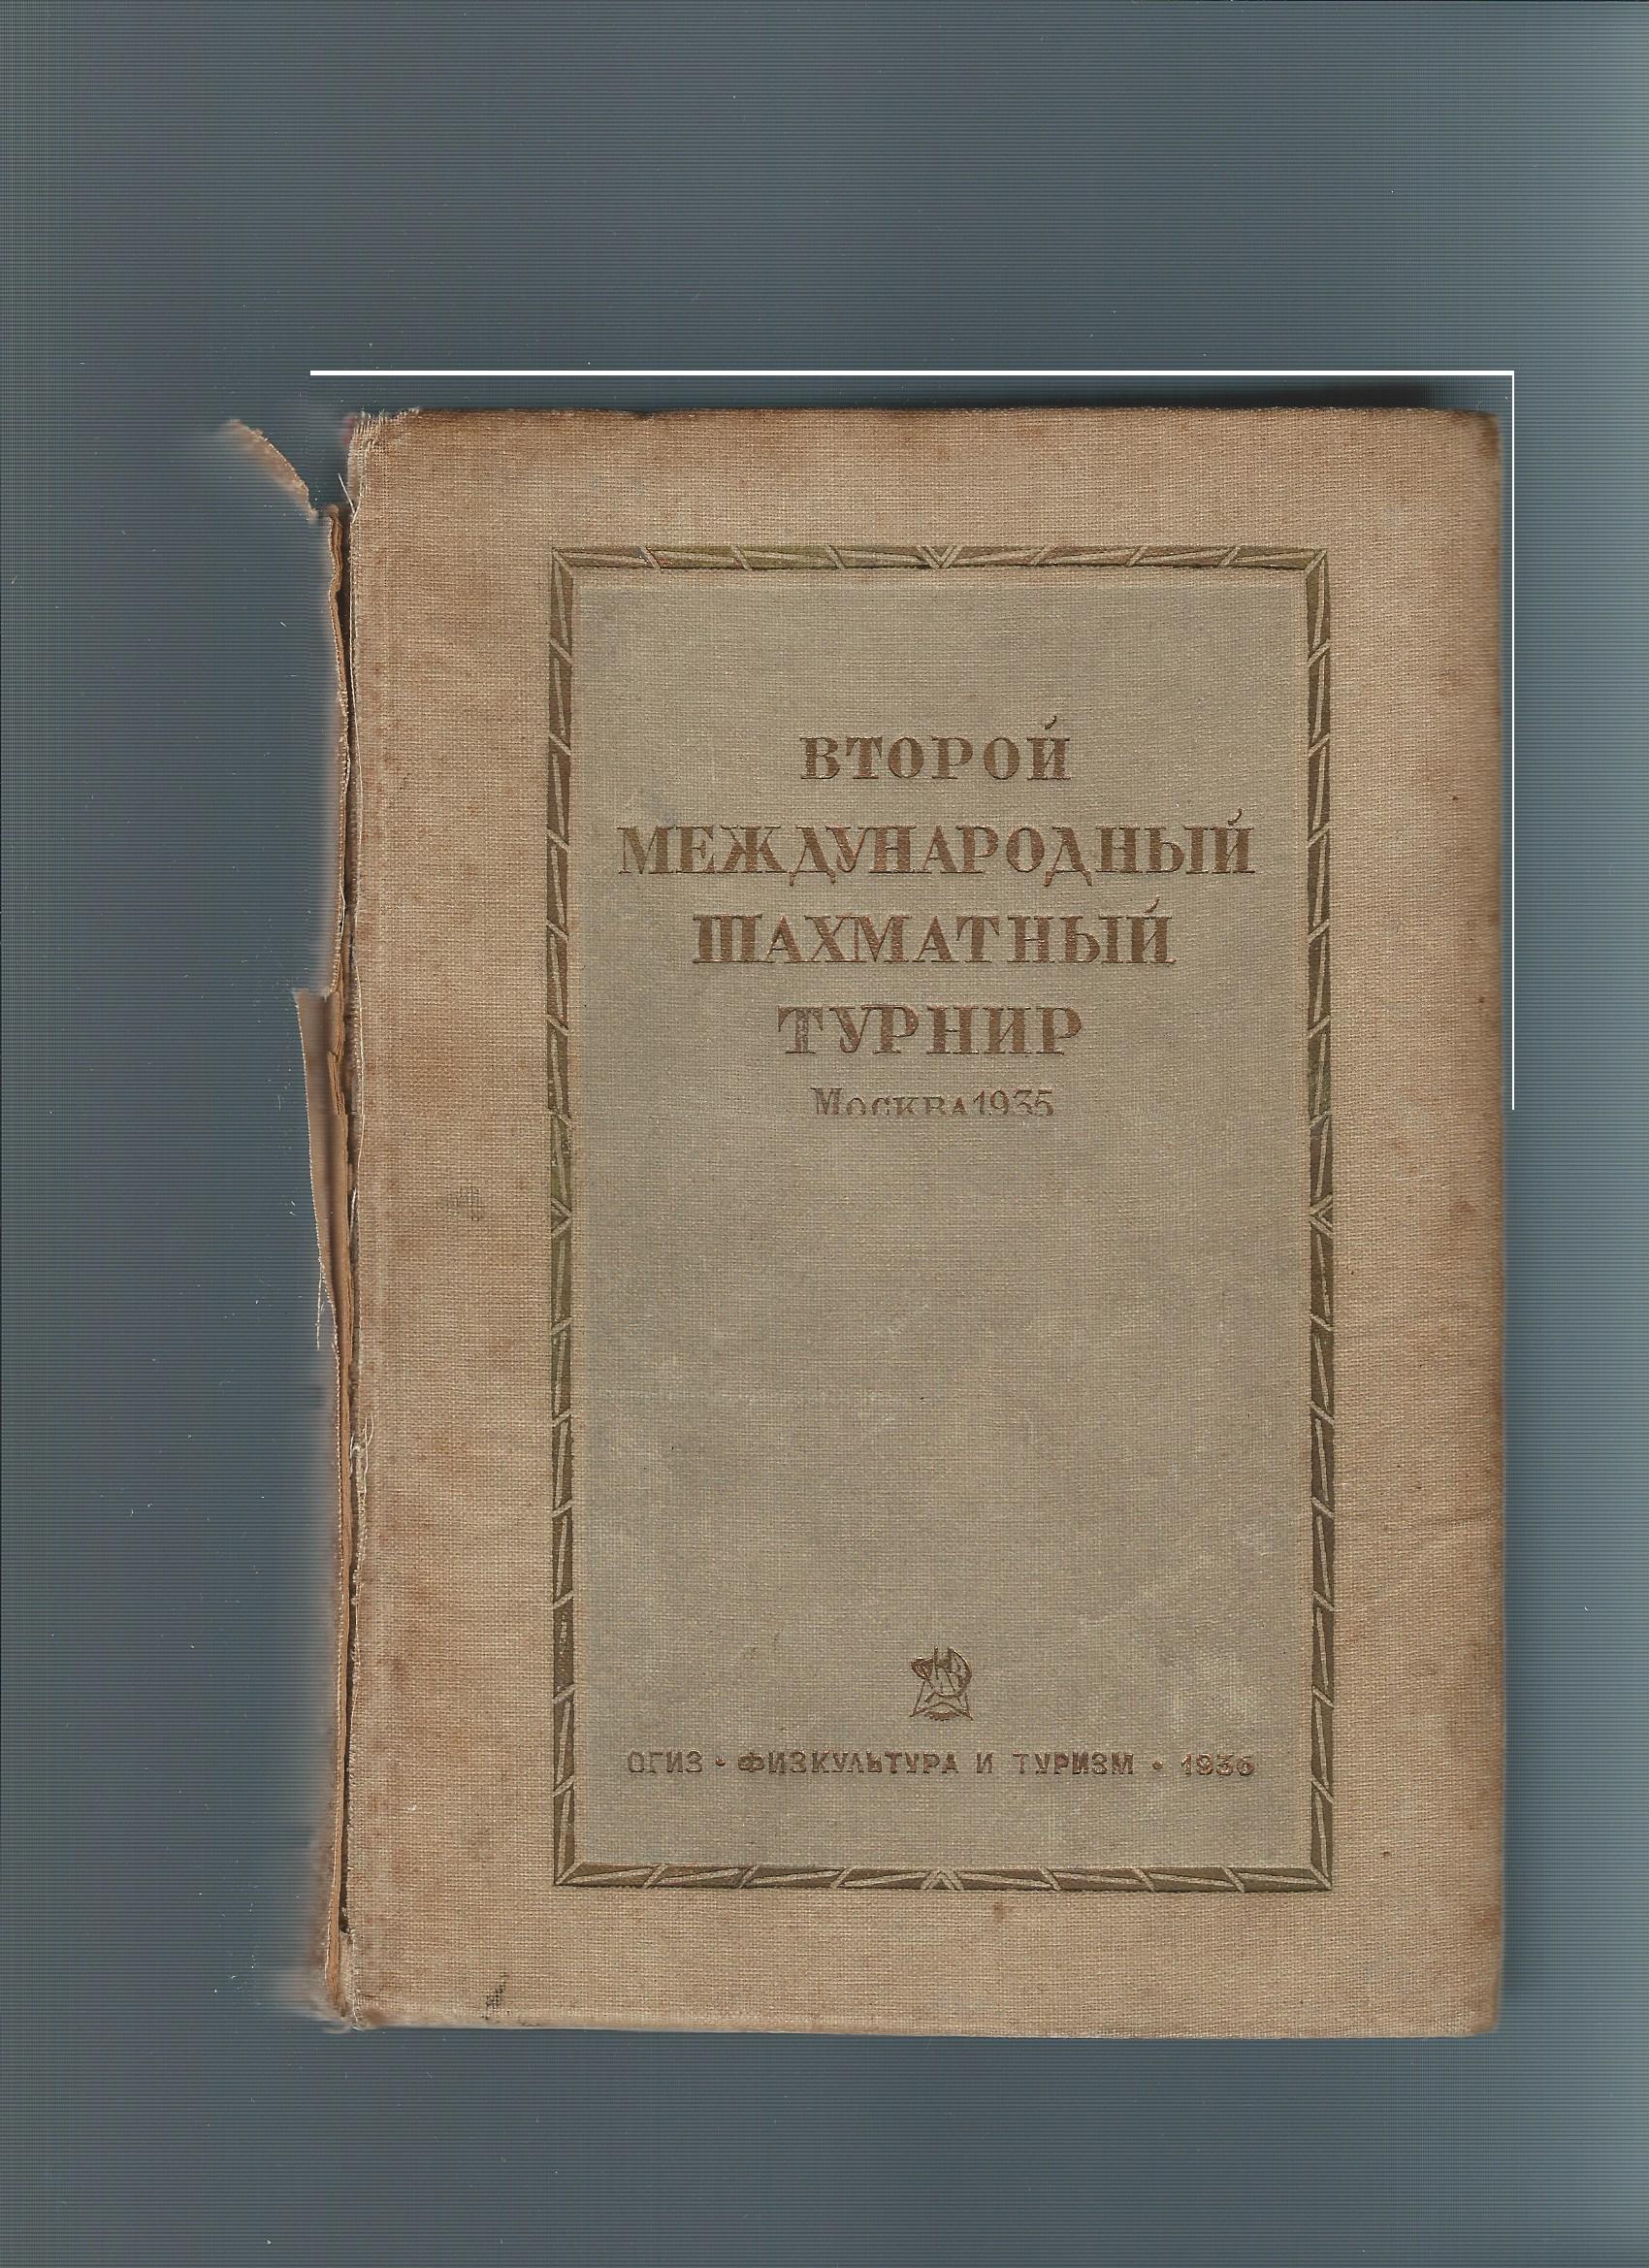 deuxieme tournoi international d'echecs Moscou 1935